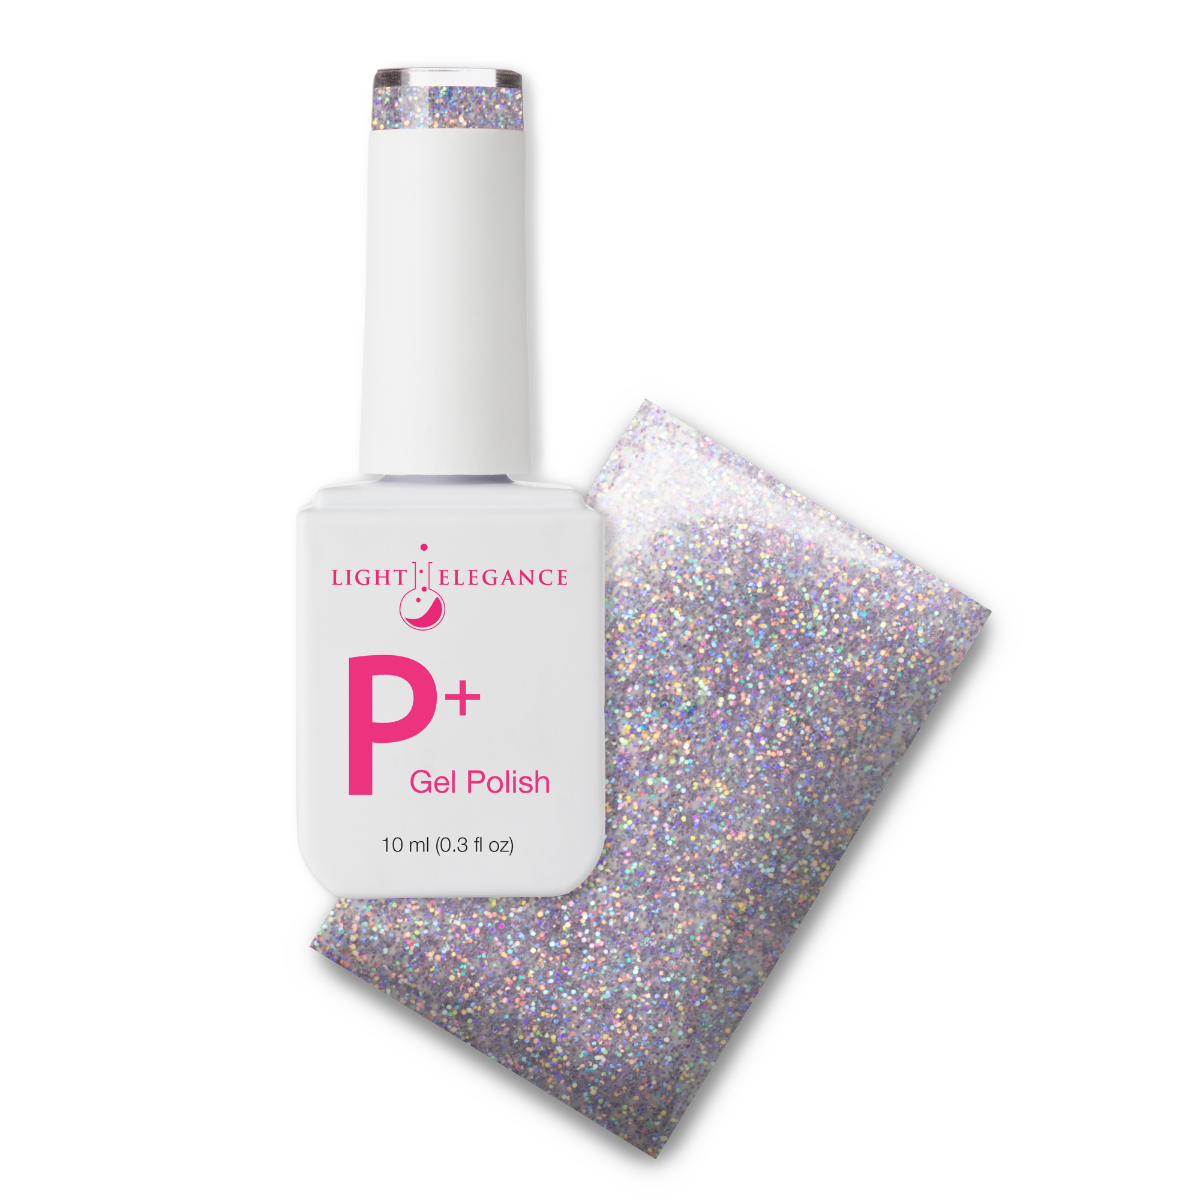 Light Elegance P+ Soak Off Glitter Gel - Get Buzzed :: New Packaging - Creata Beauty - Professional Beauty Products